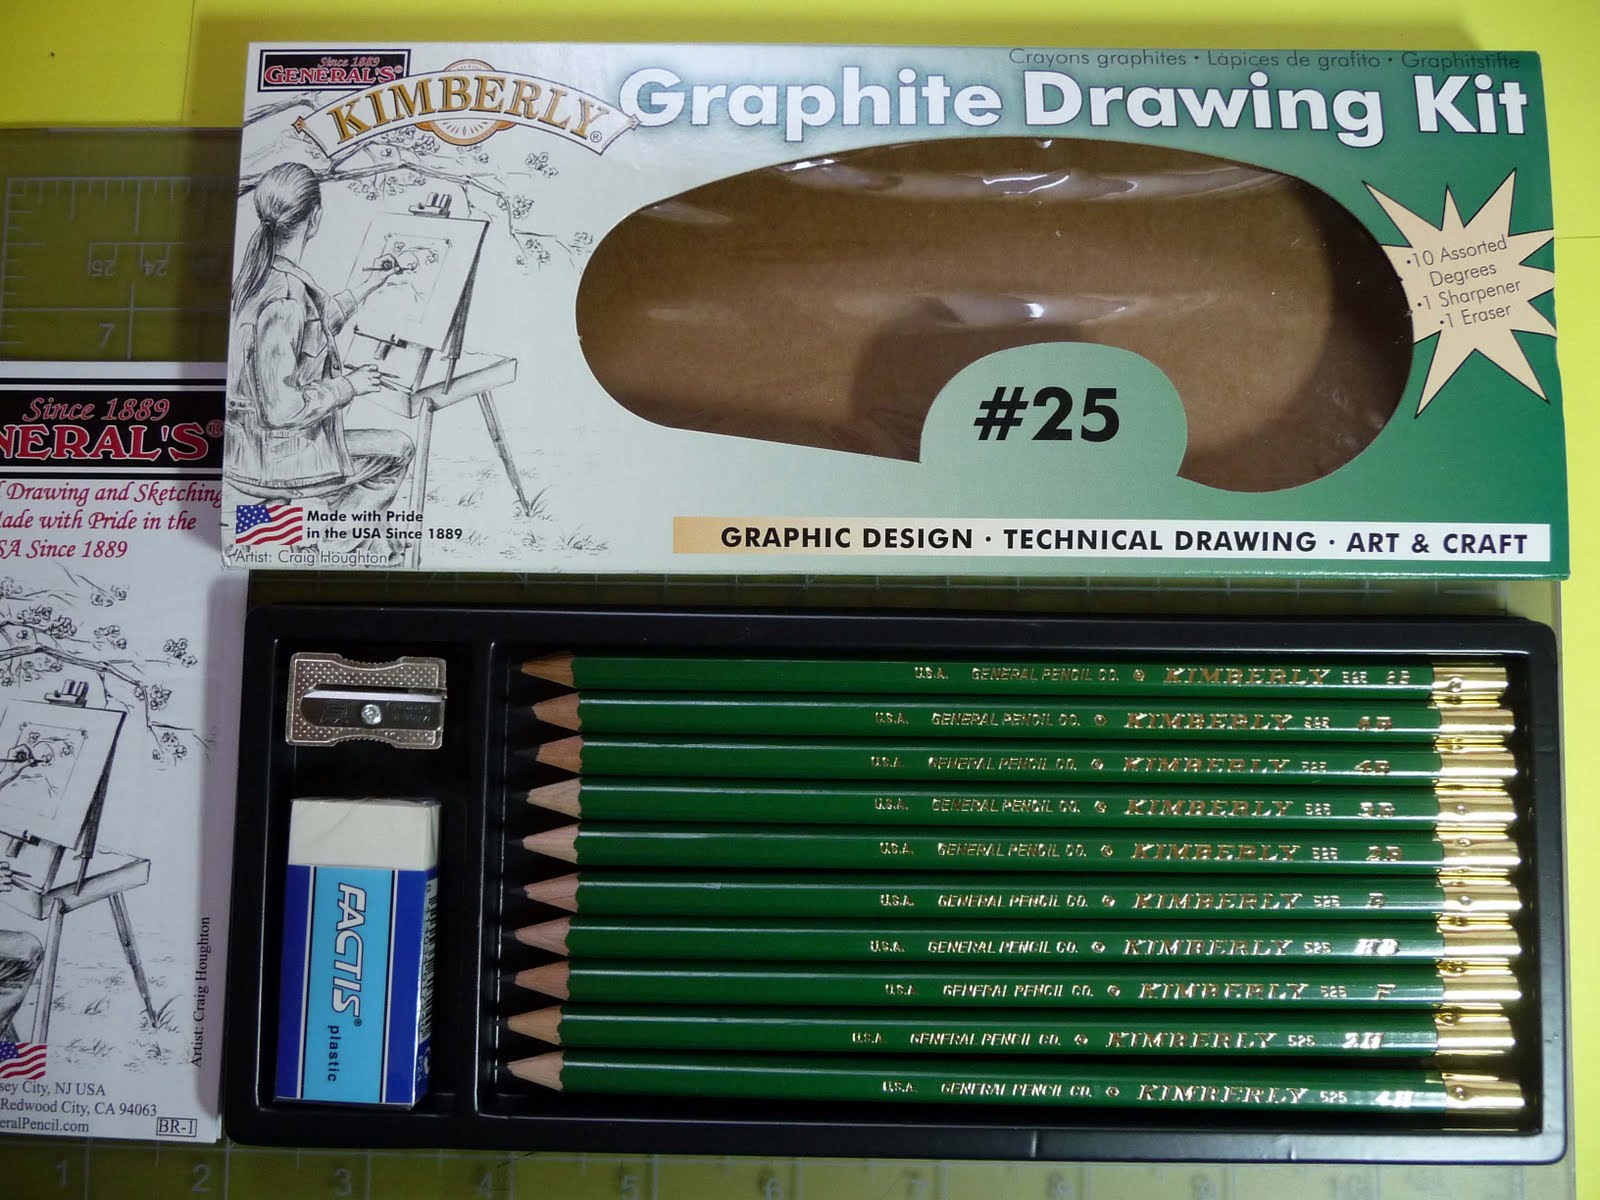 General's SketchMate Drawing Kit